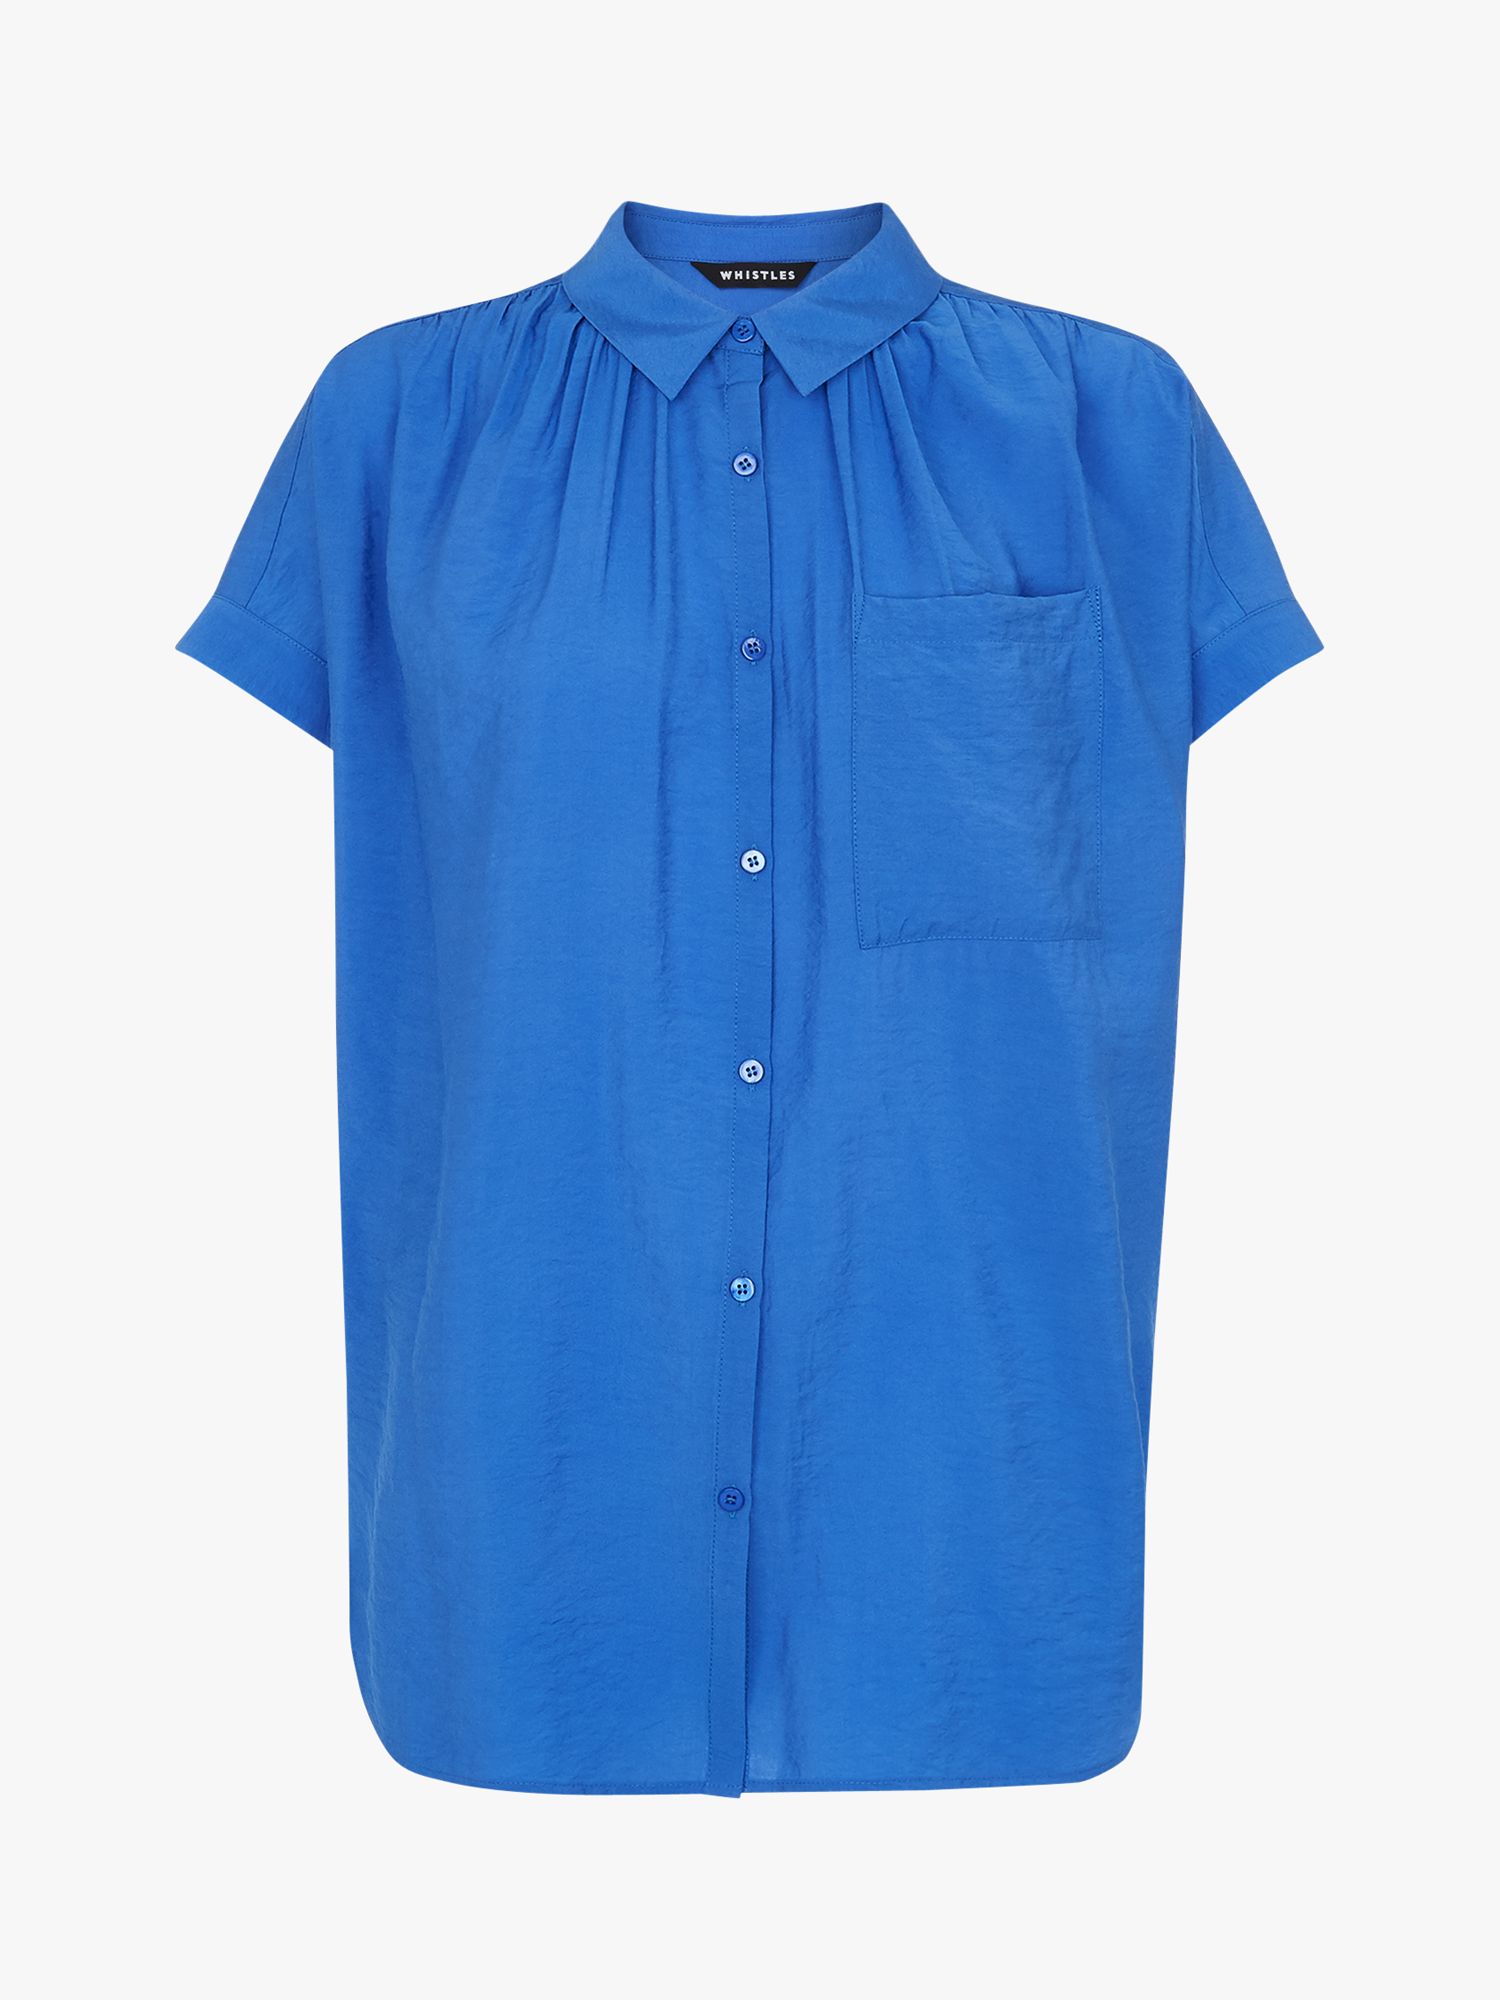 Whistles Nicola Button Through Shirt, Blue at John Lewis & Partners